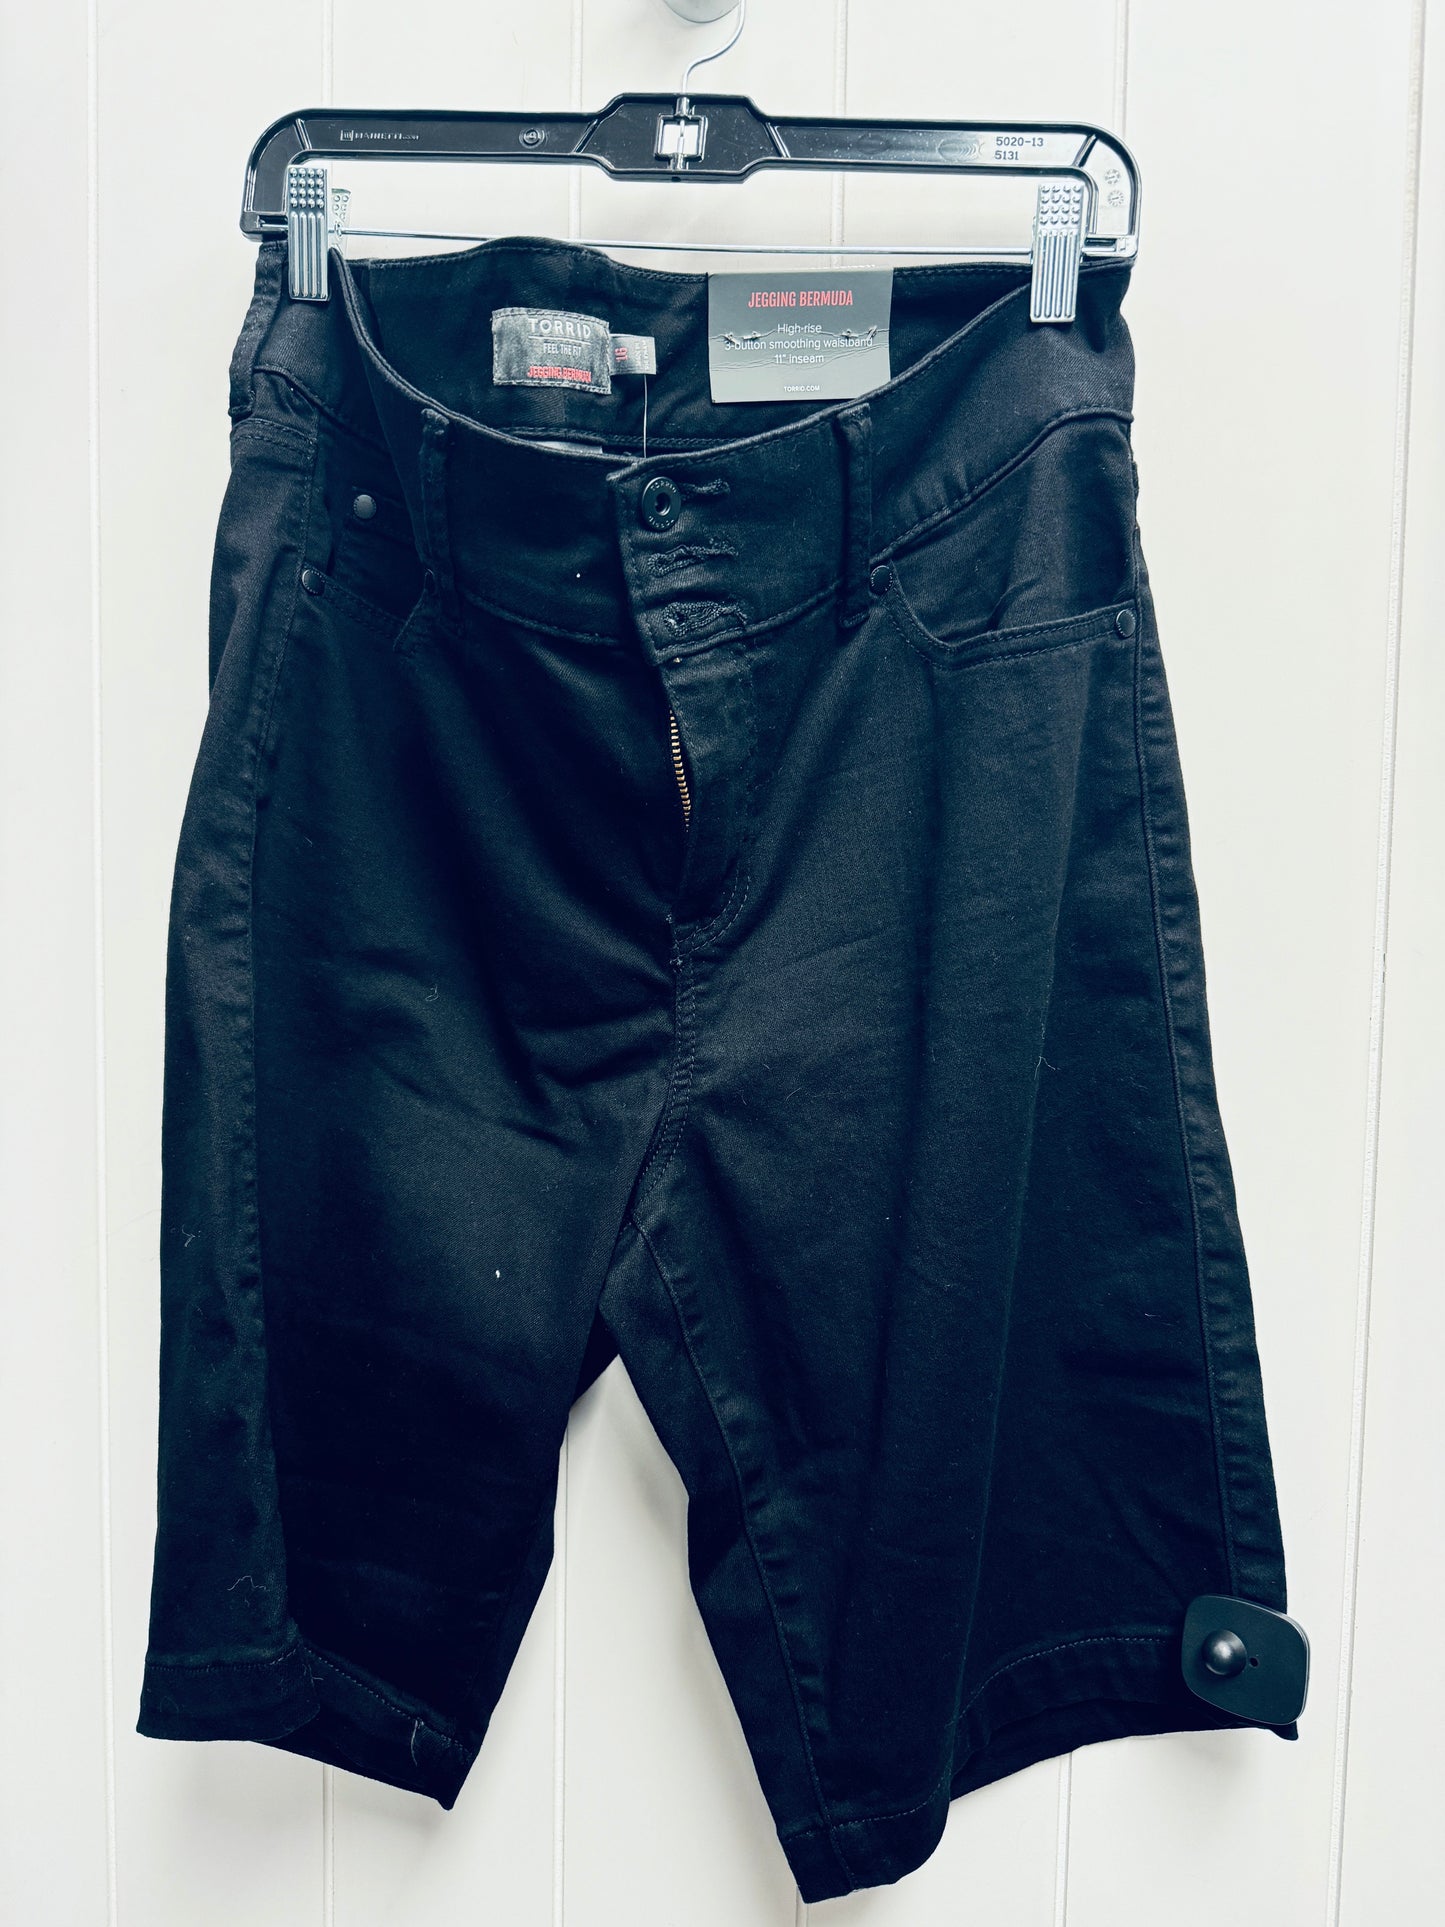 Black Shorts Torrid, Size 16